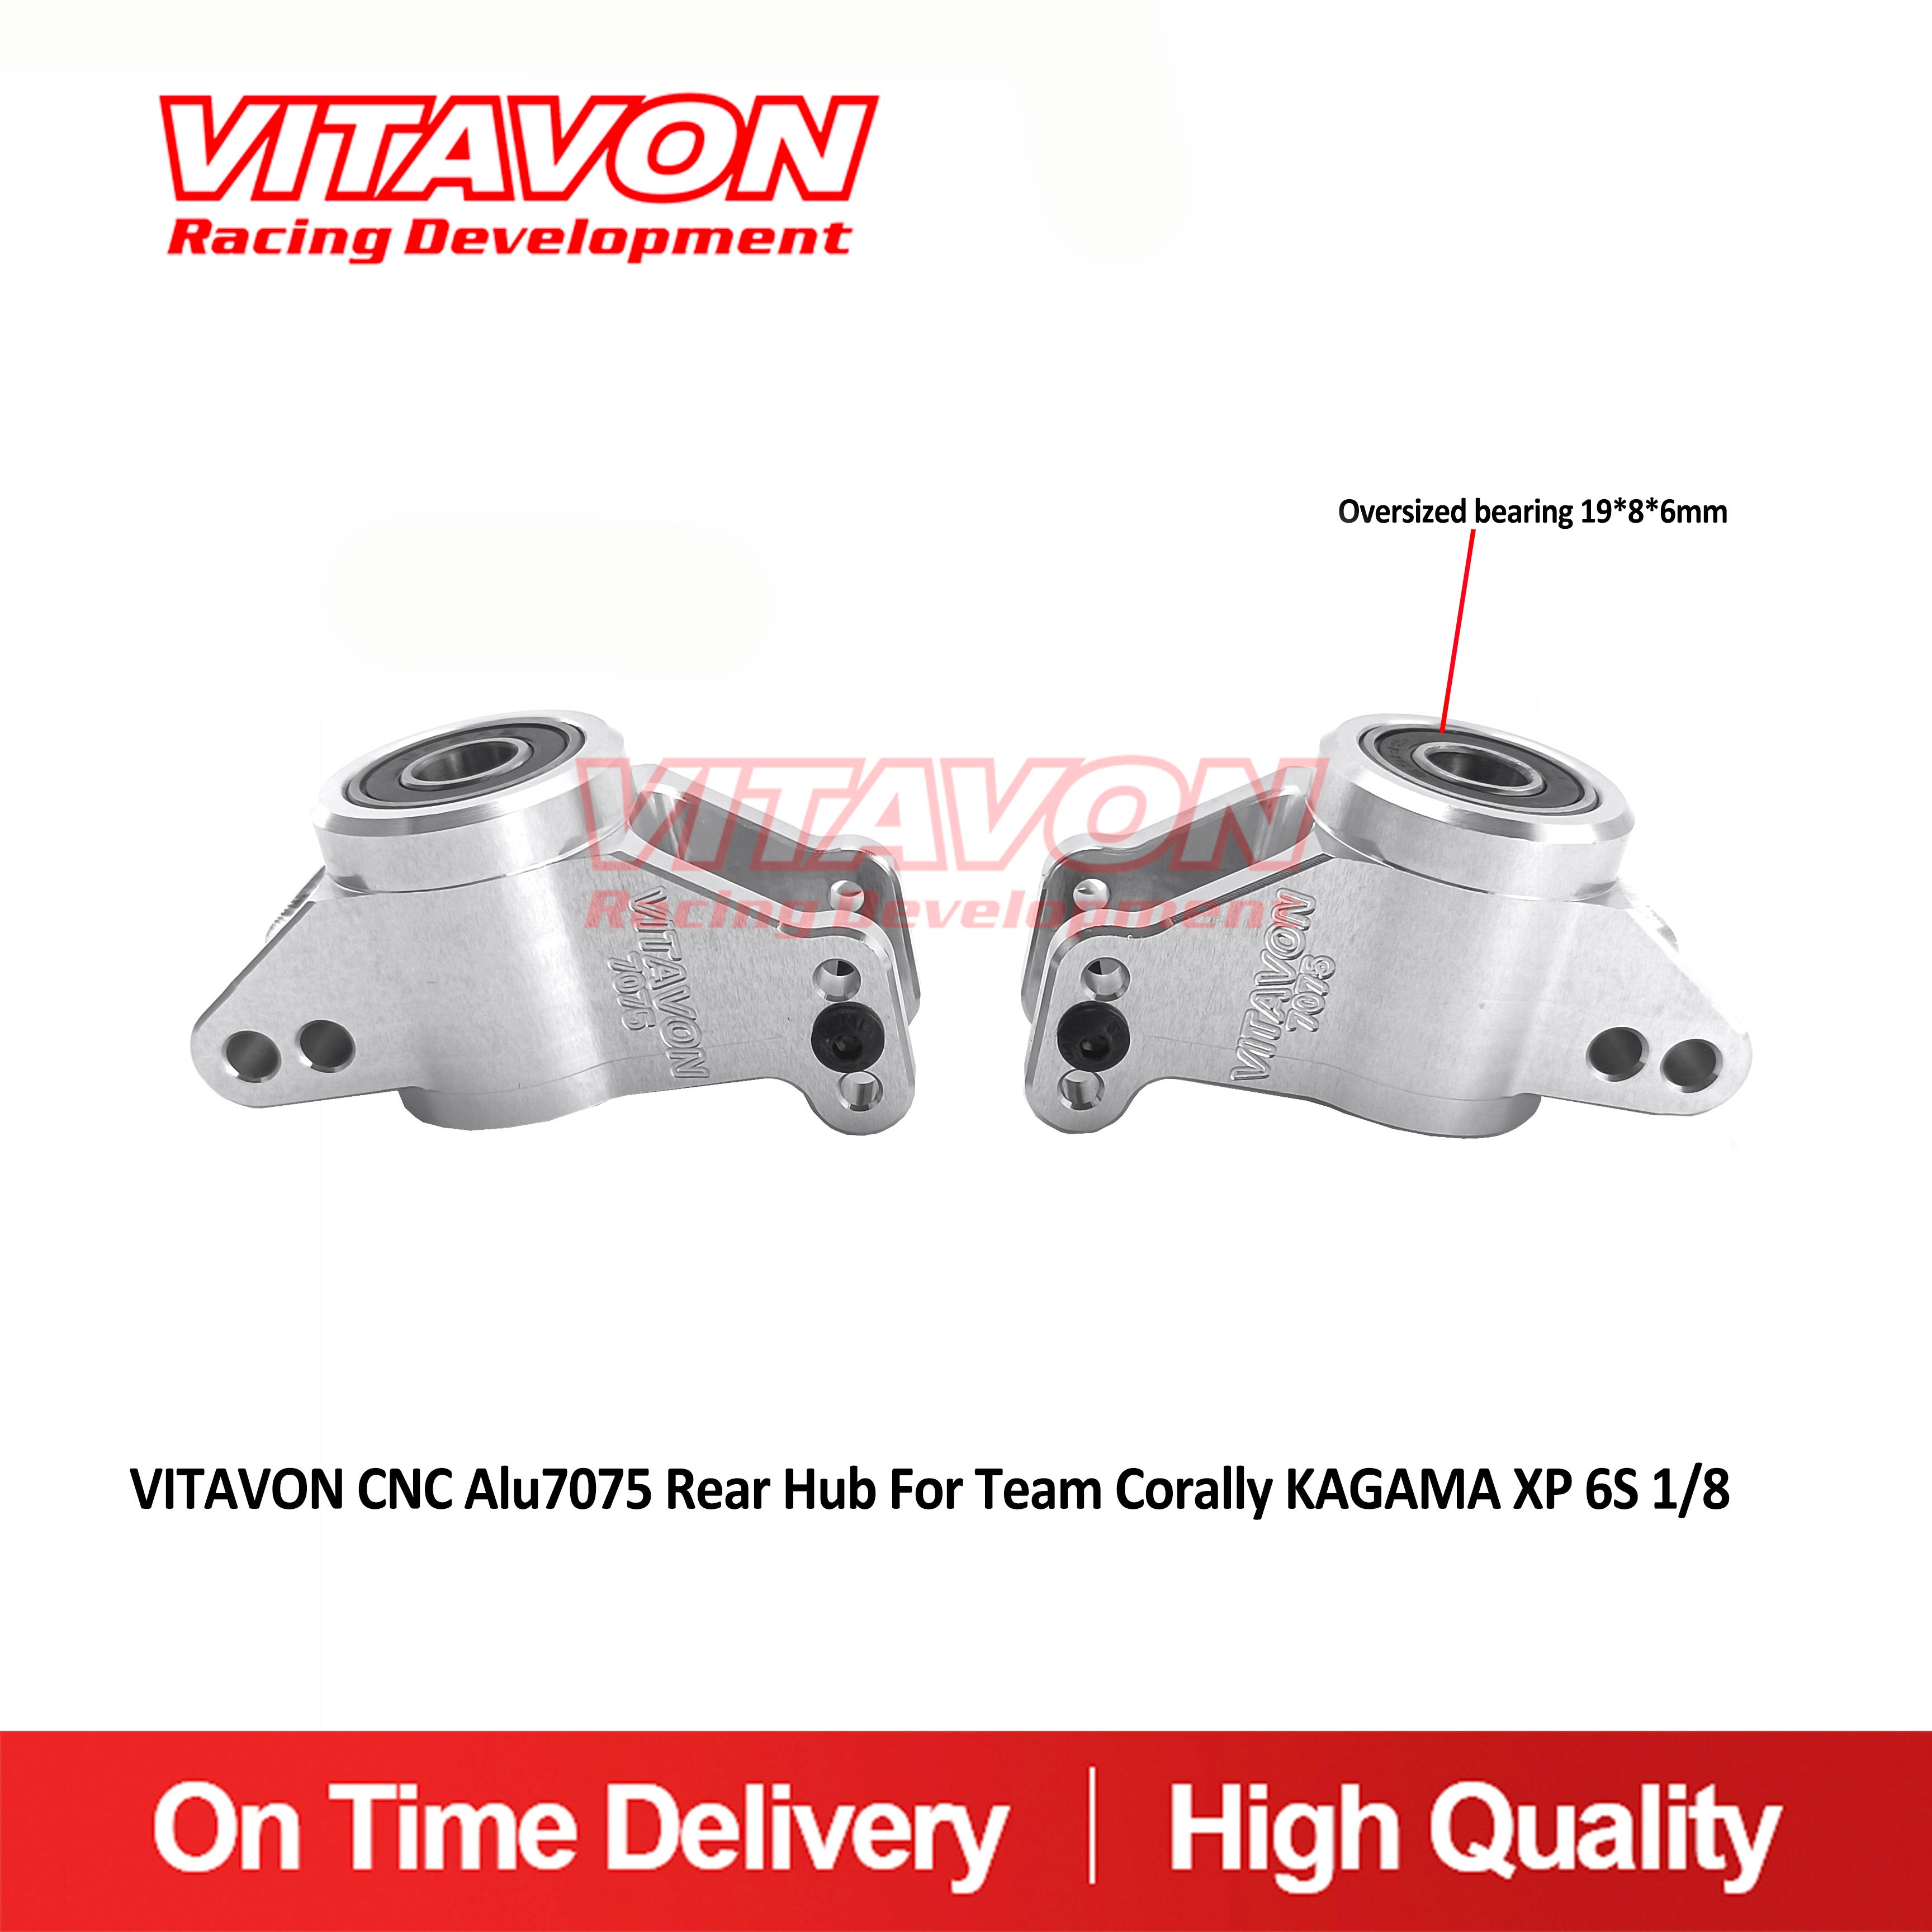 VITAVON CNC Alu7075 Rear Hub For Team Corally KAGAMA XP 6S 1/8